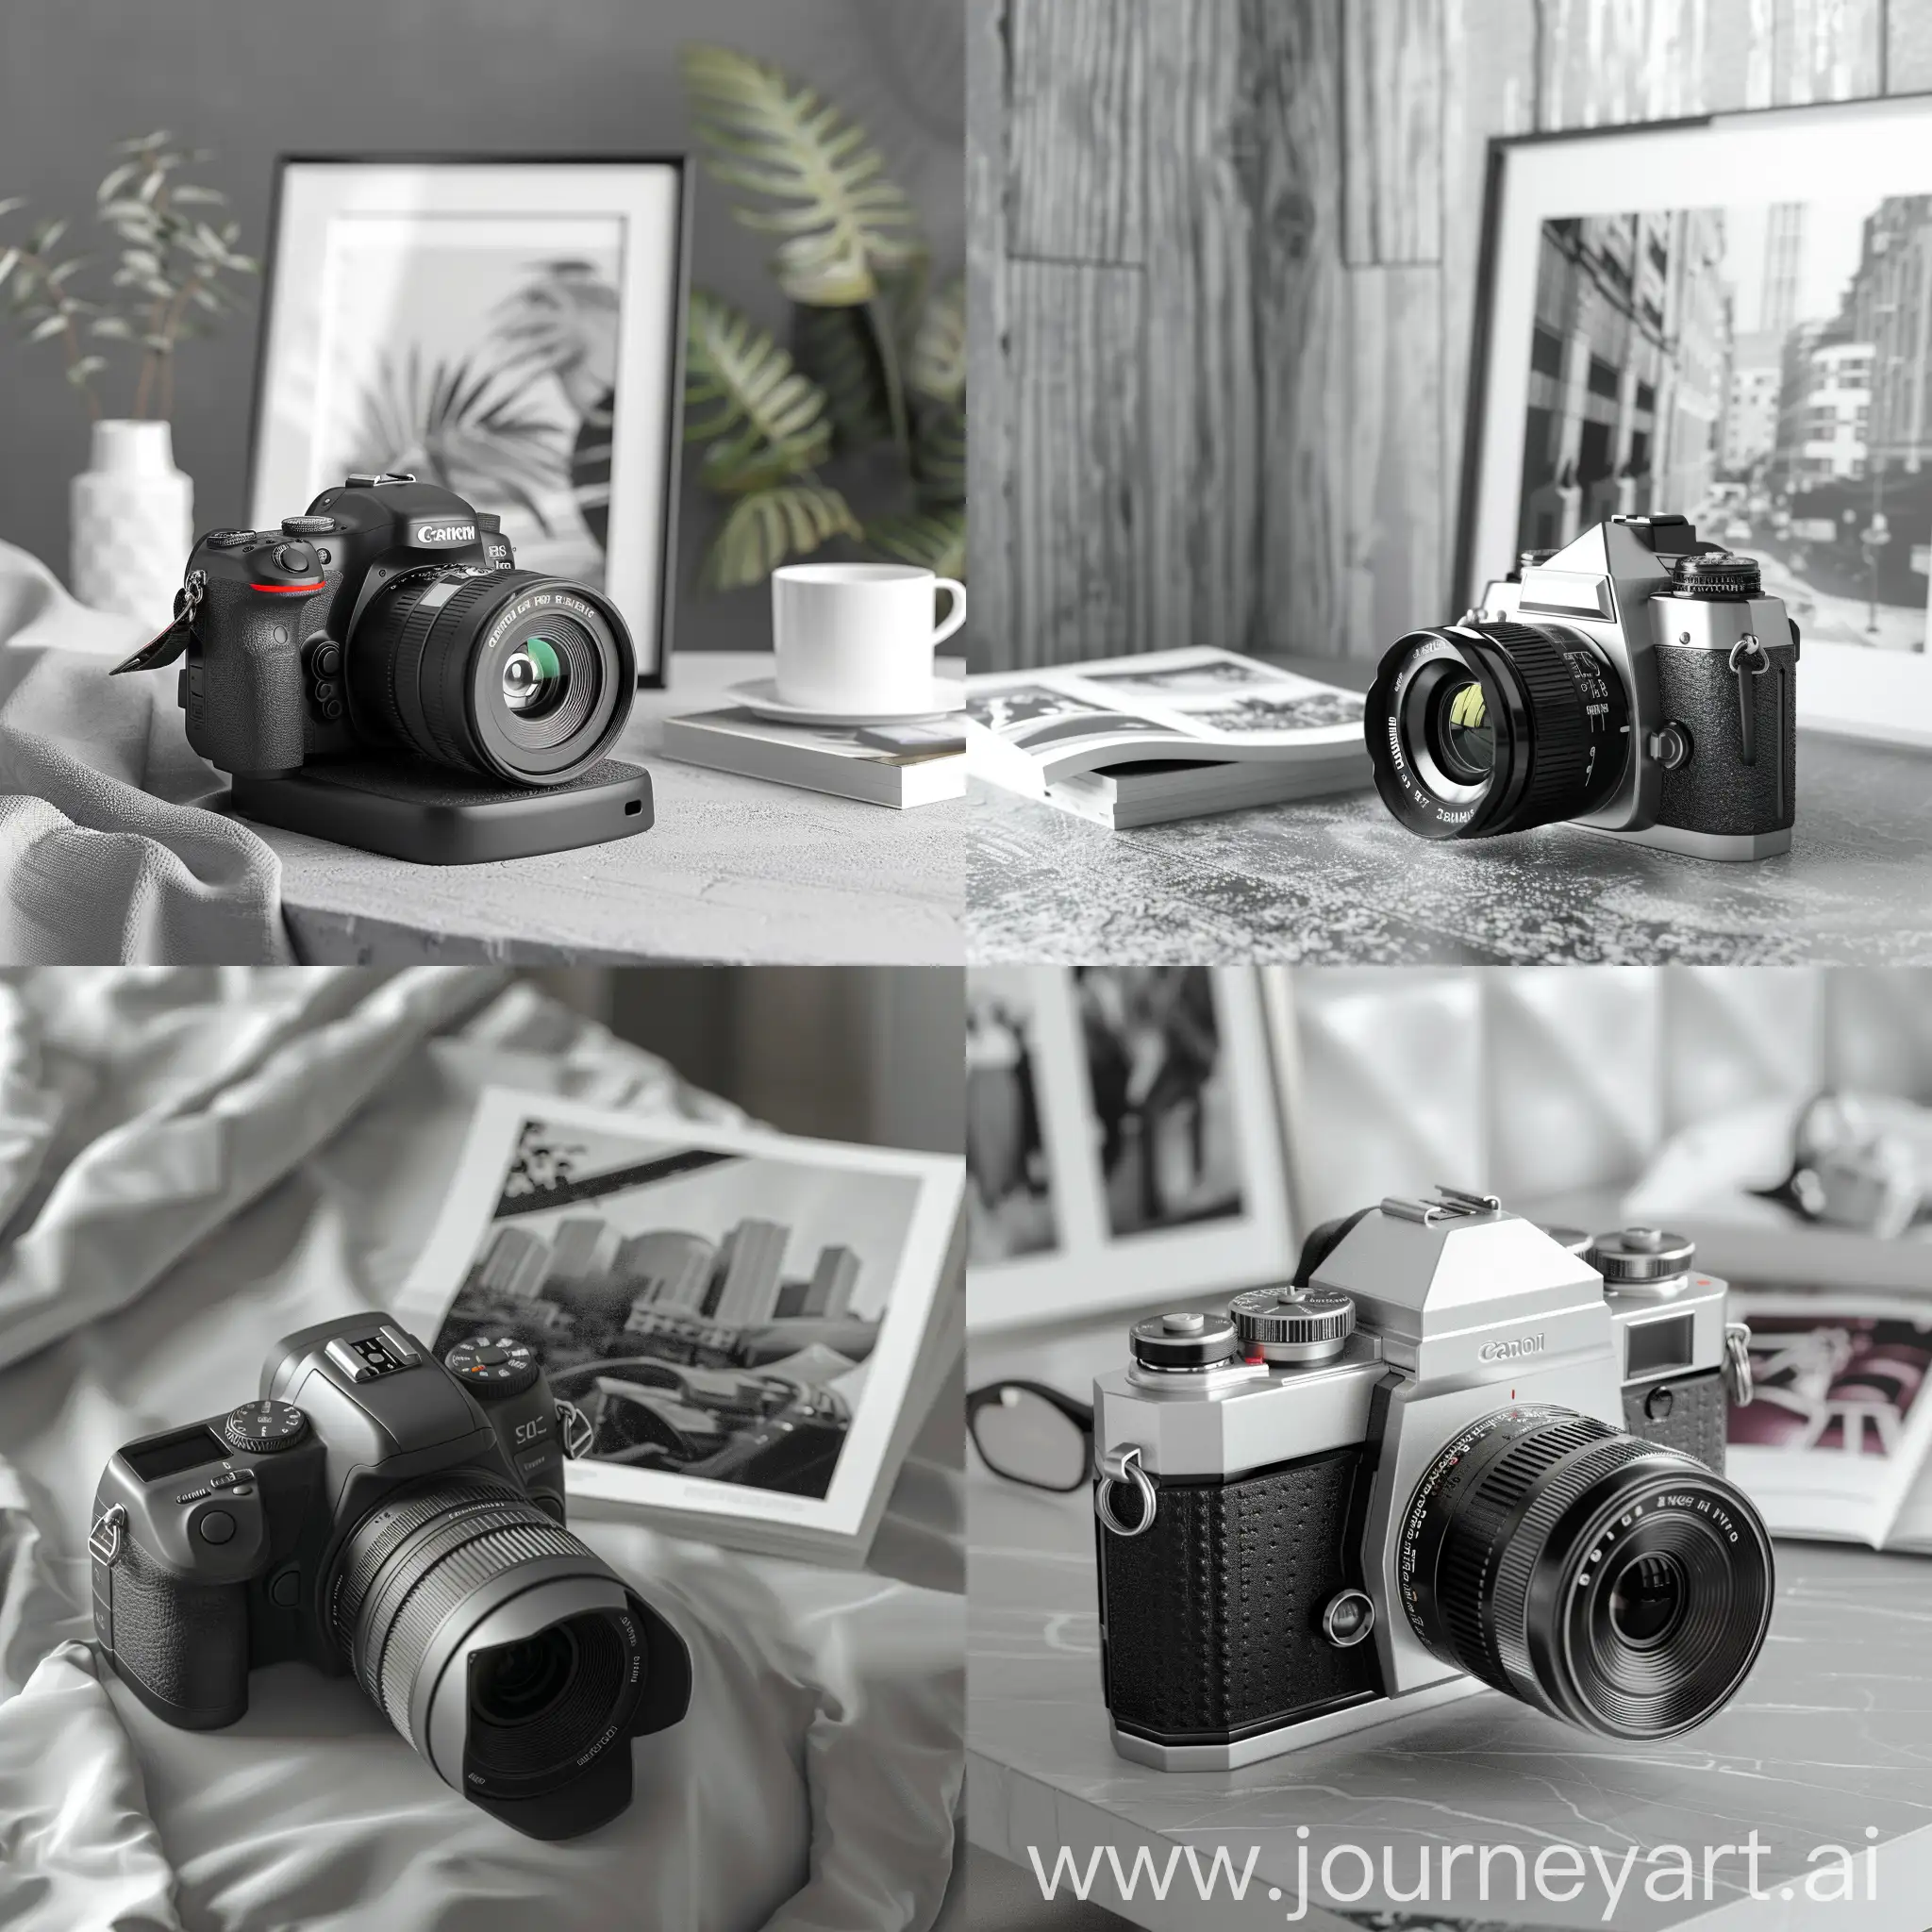 Modern-Camera-on-Table-with-Stylish-Black-and-White-Magazine-Photo